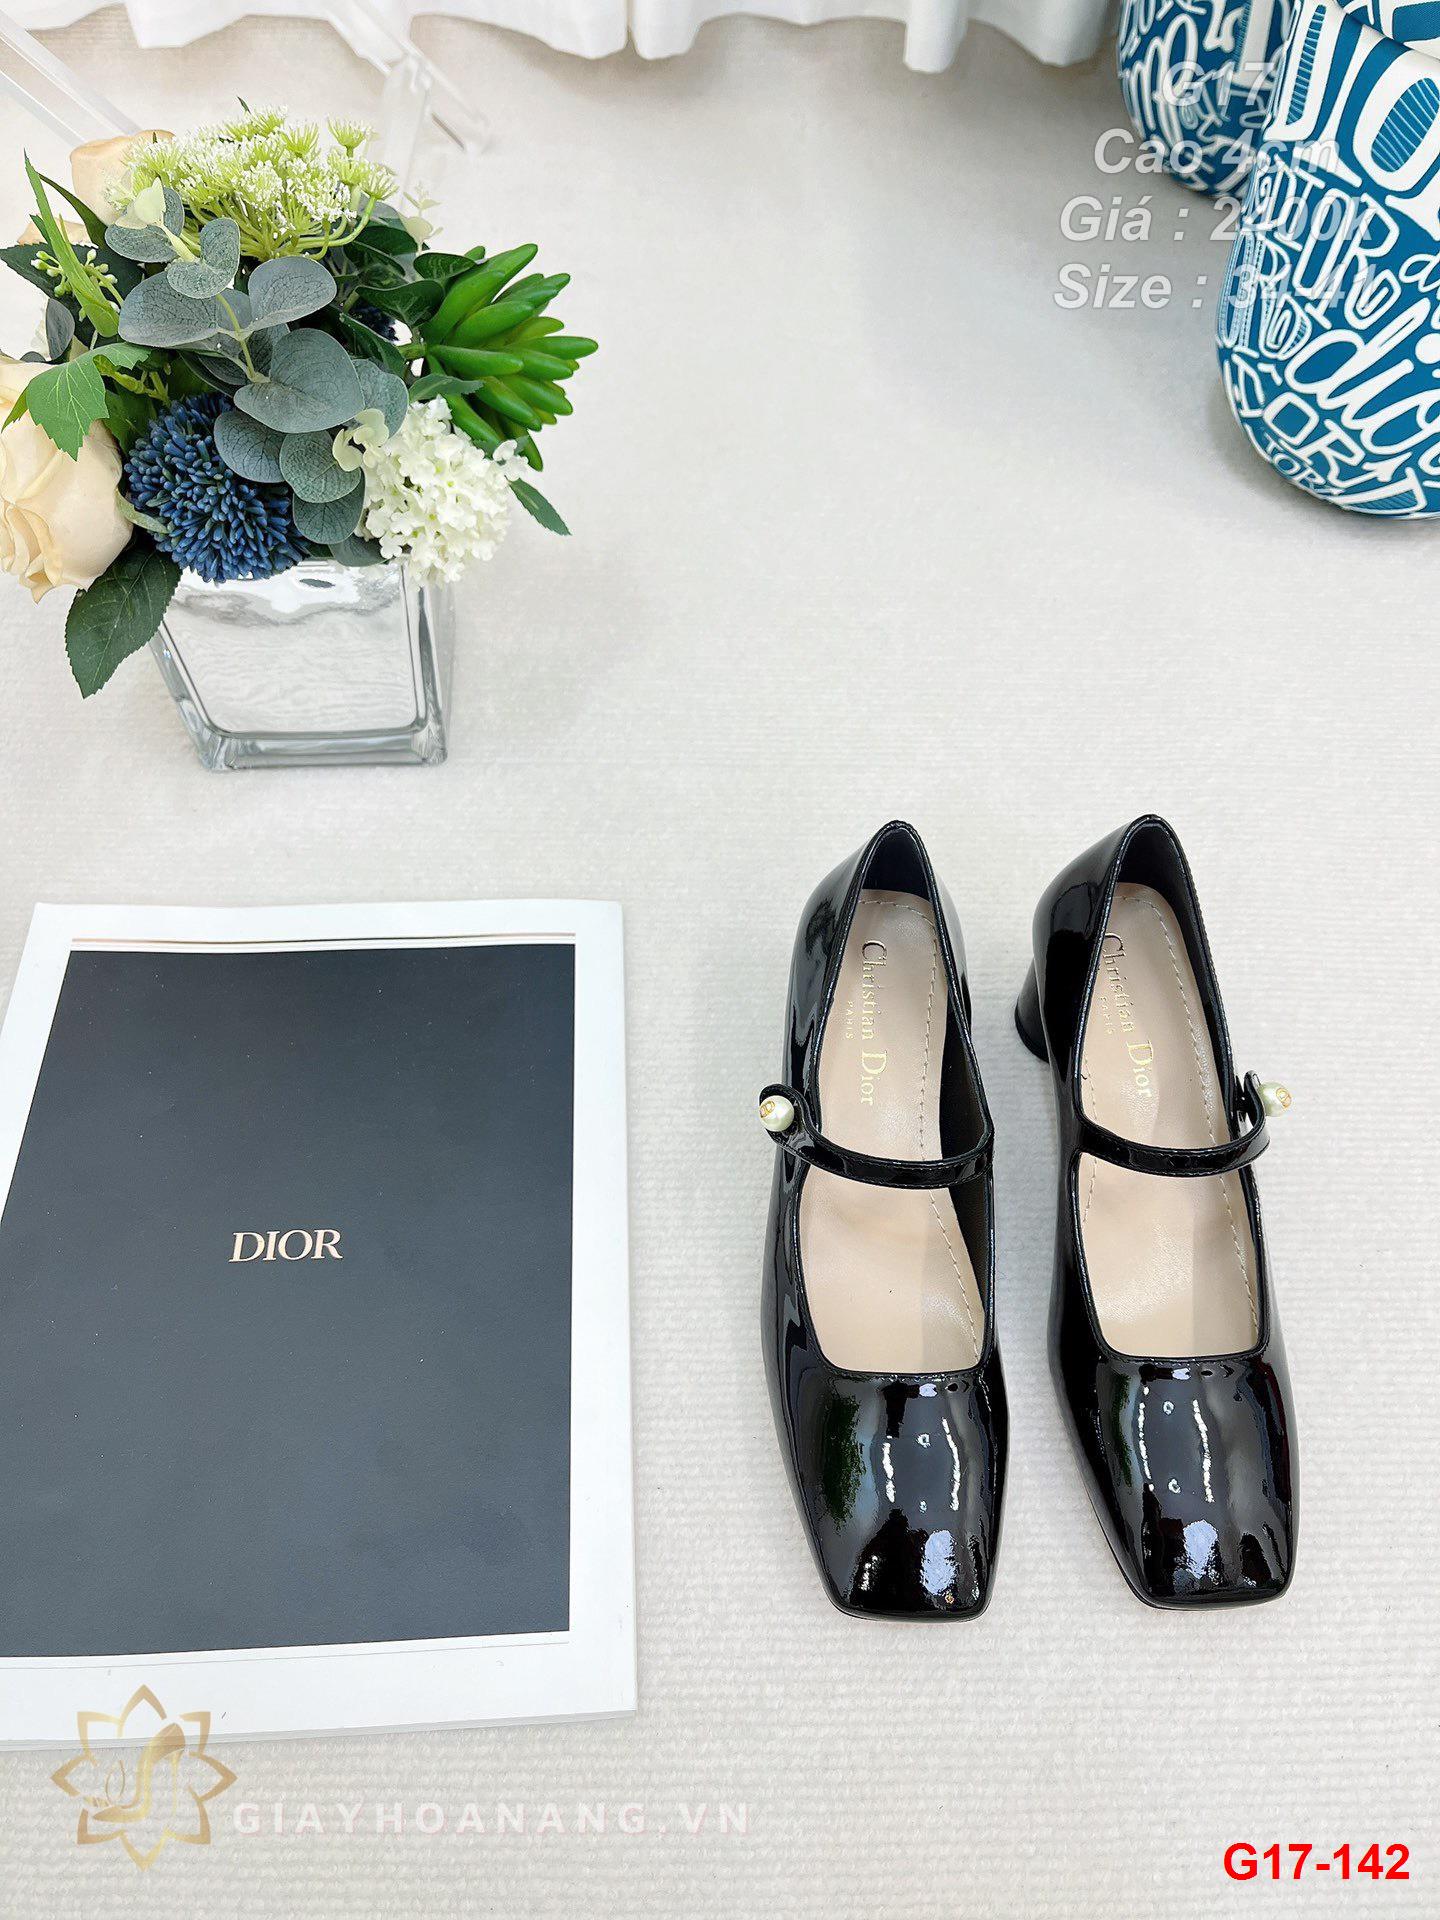 G17-142 Dior giày cao 4cm siêu cấp